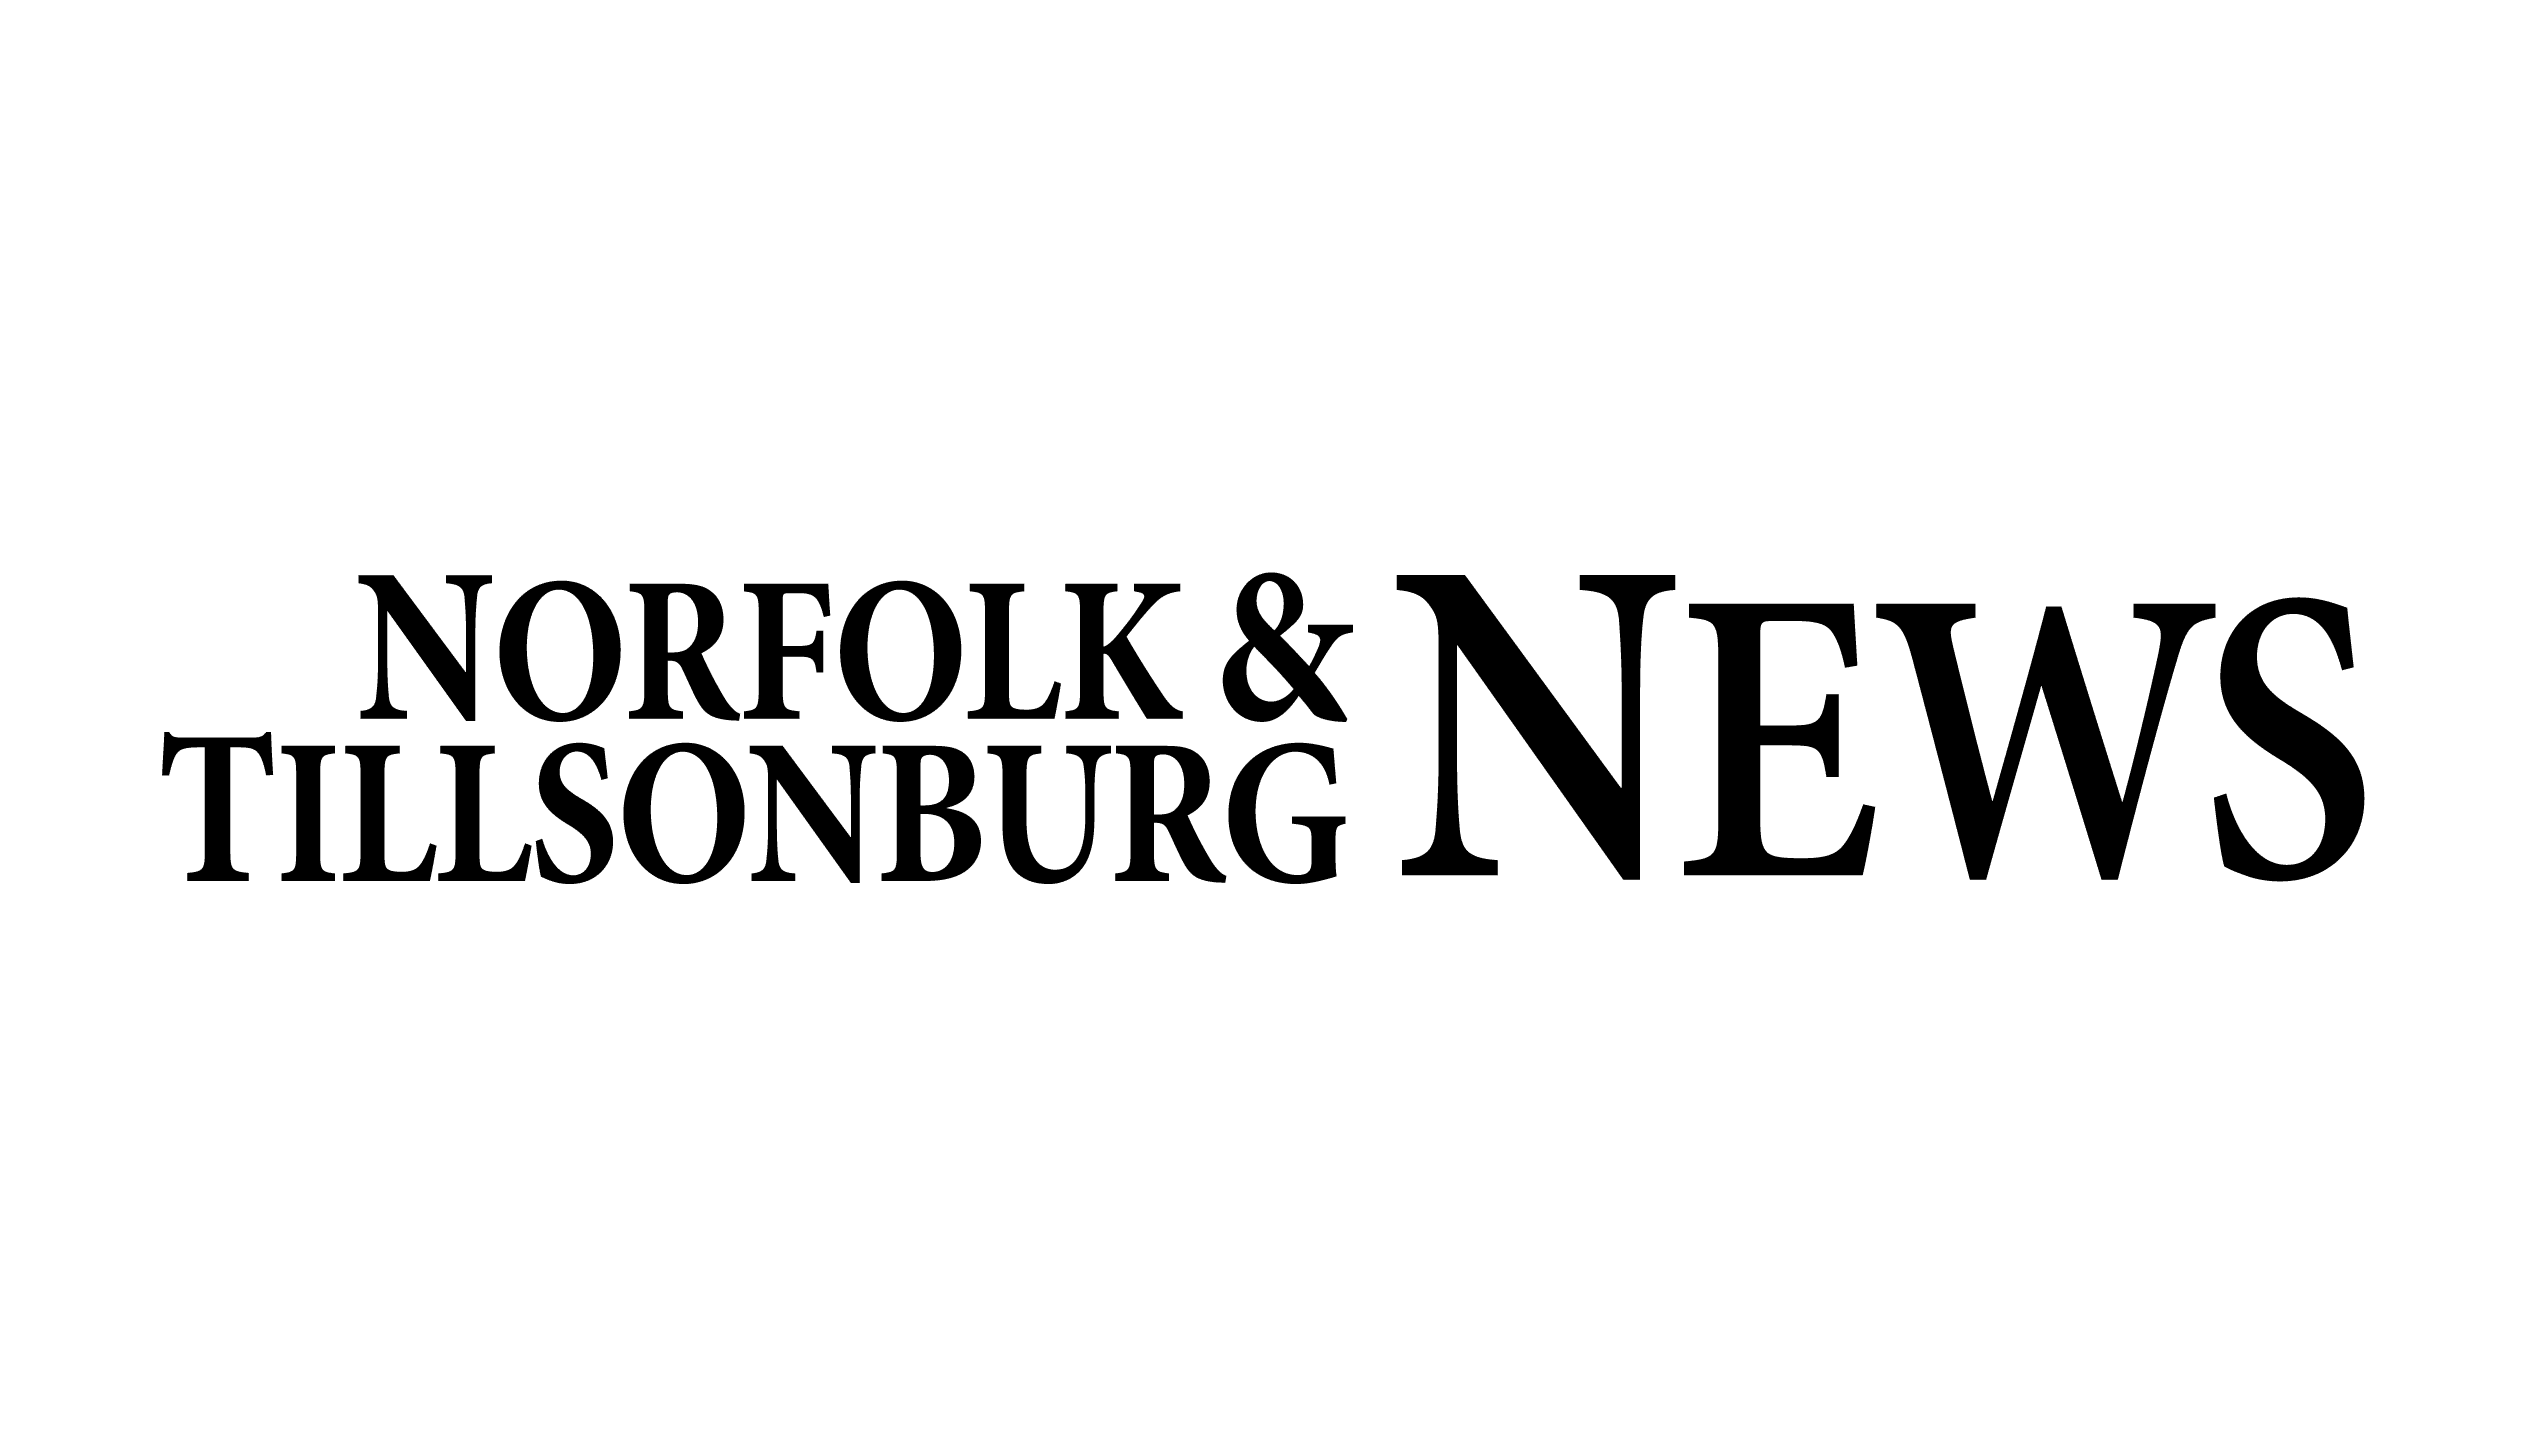 Norfolk and Tillsonburg News (link opens in new window)